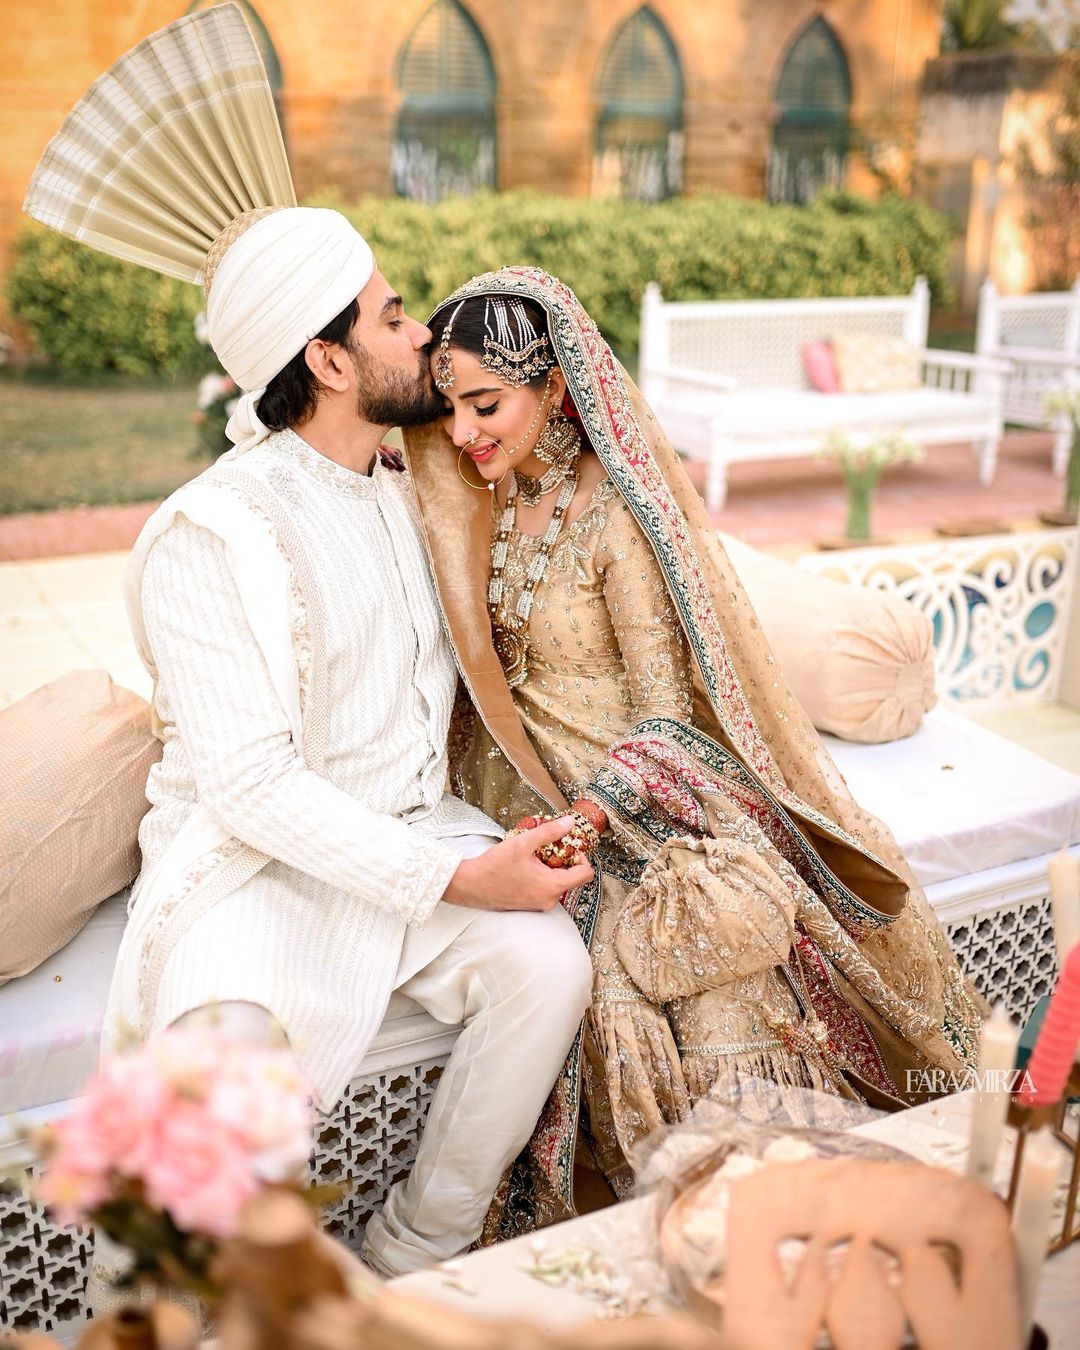 Iqra Aziz wedding dress - BOL News